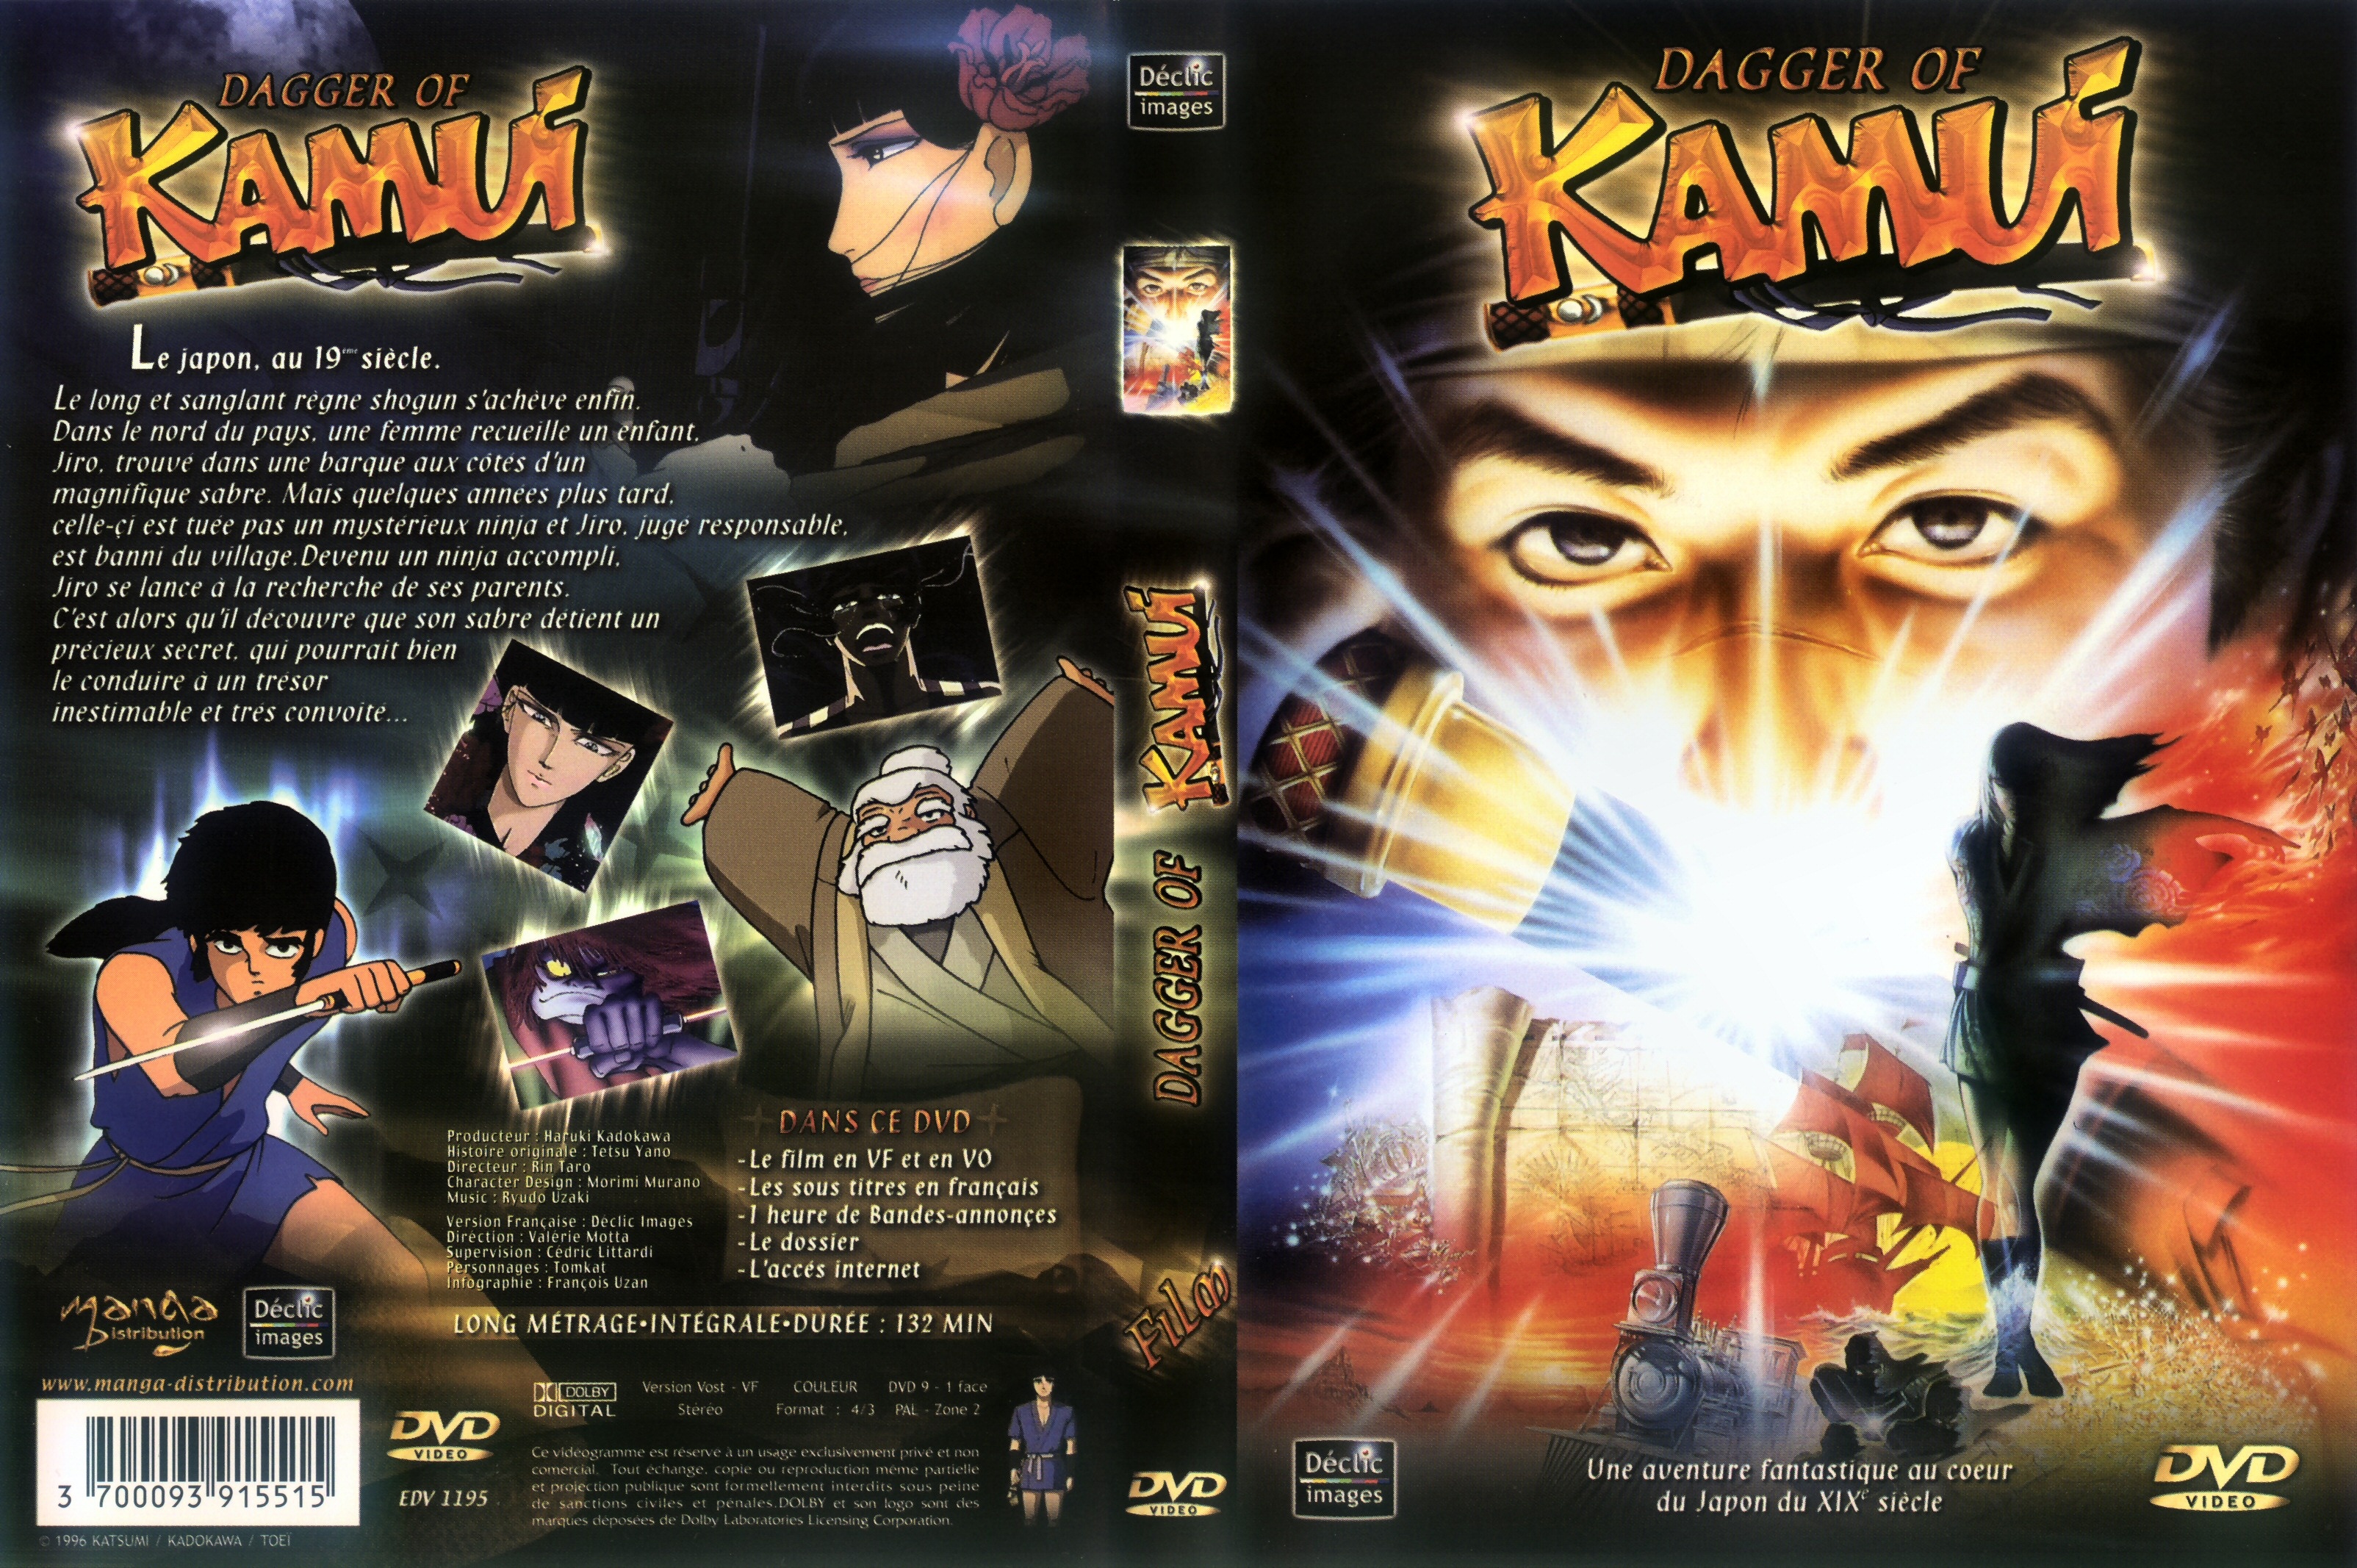 Jaquette DVD Dagger of Kamui